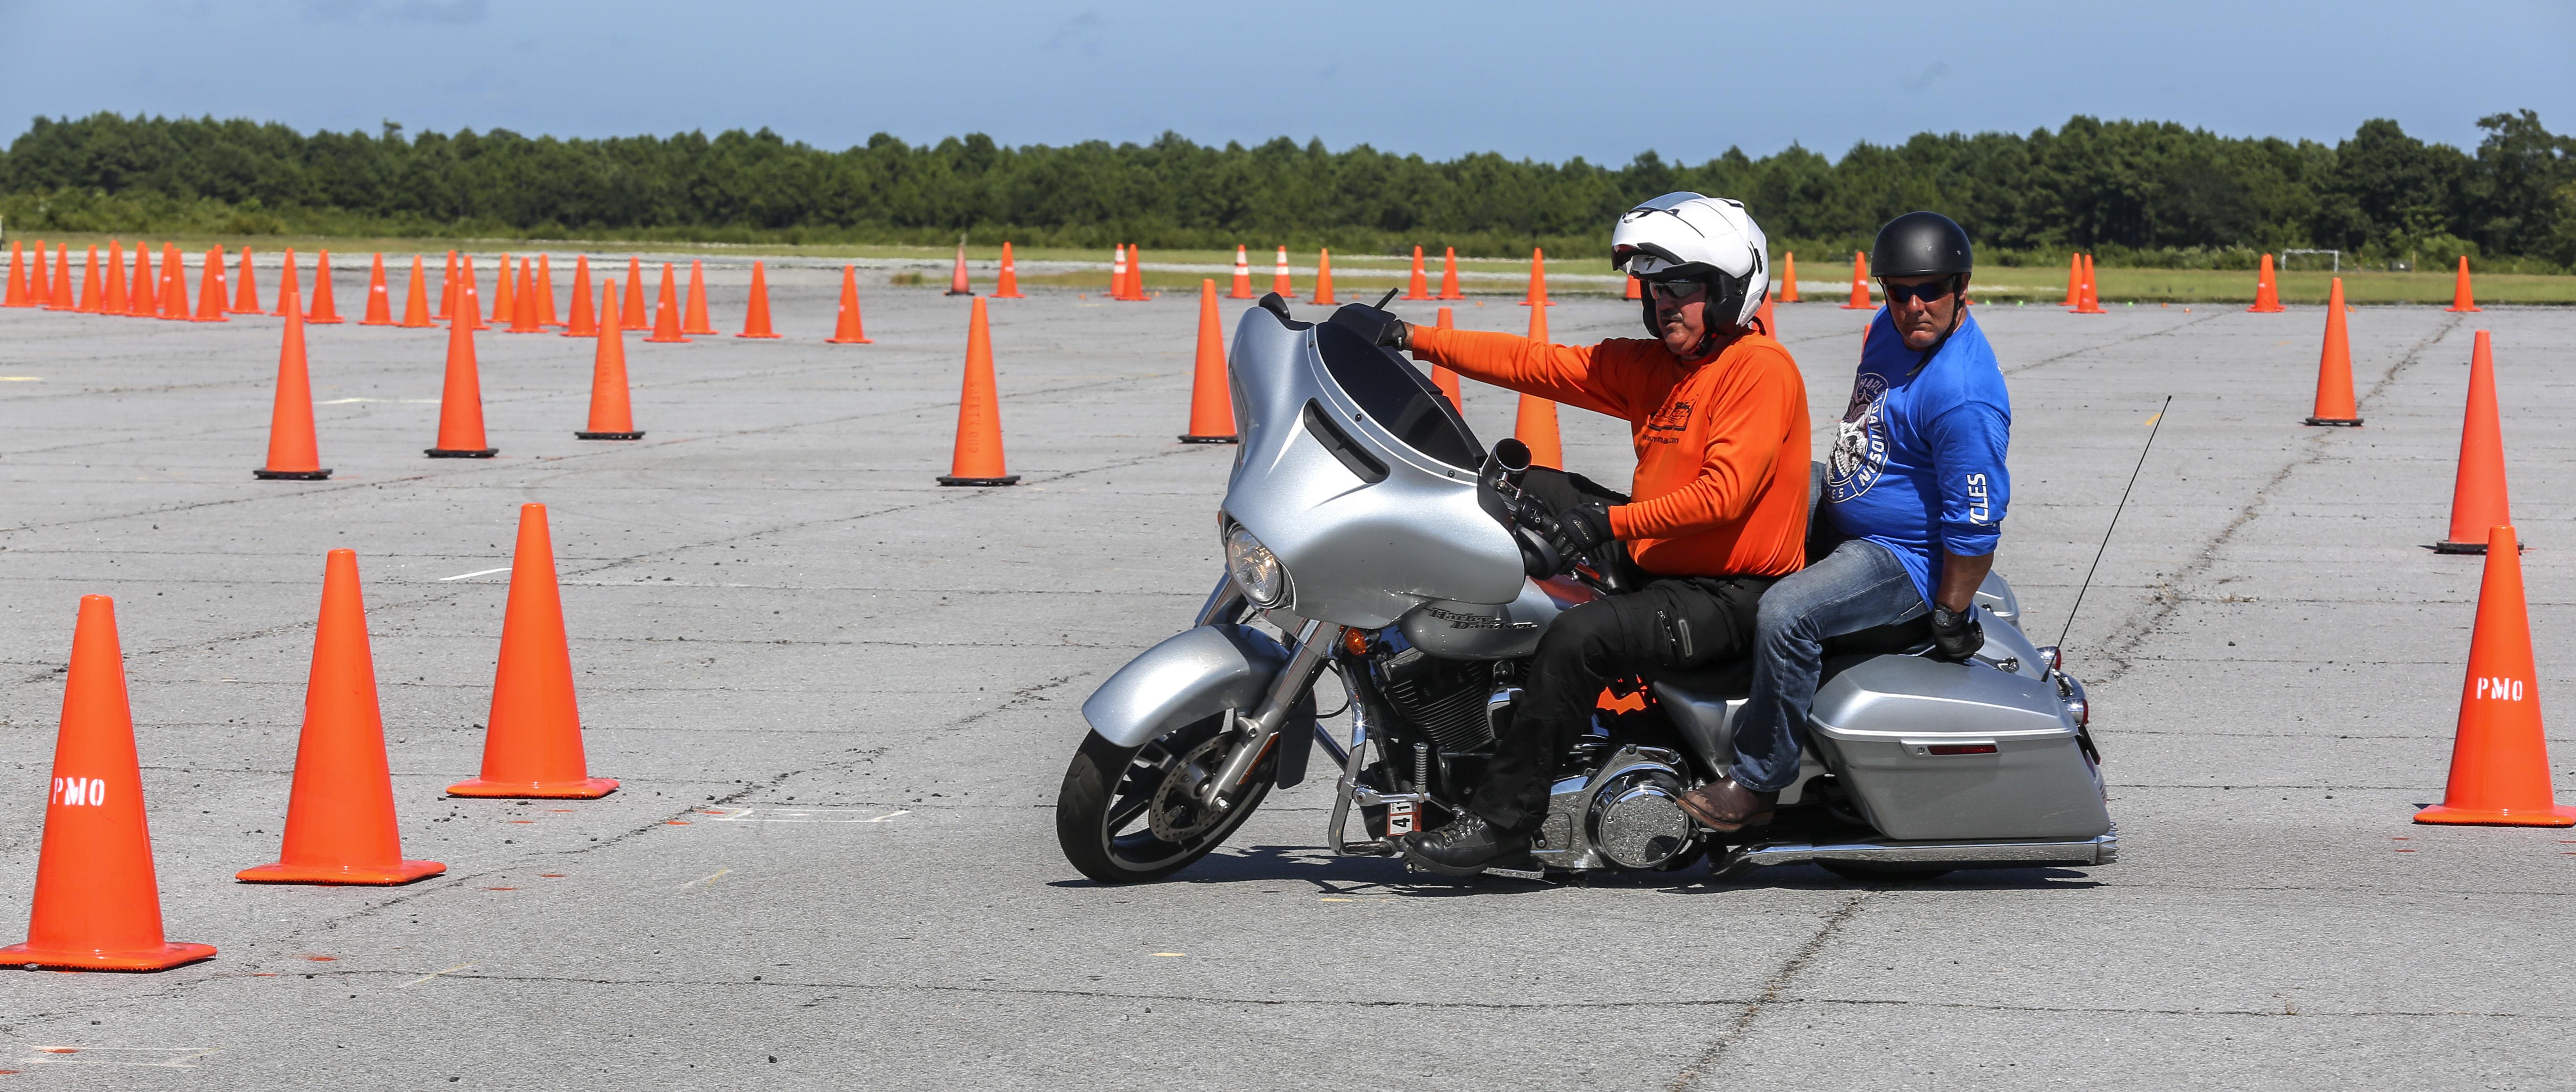 Bike Safe training keeps motorcyclist on their feet, prepared for danger